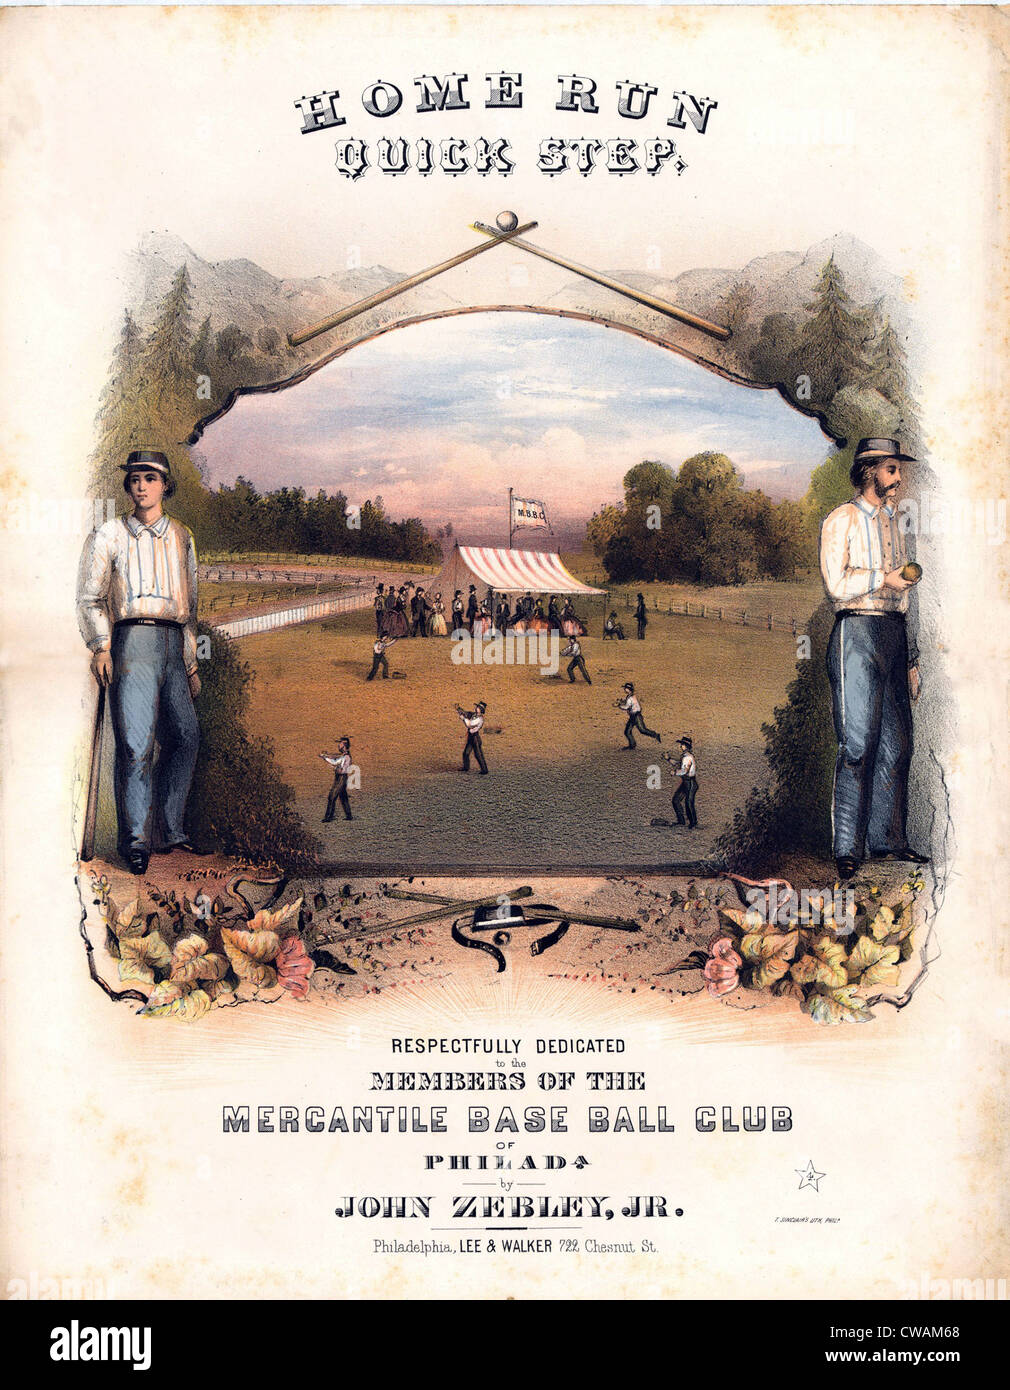 Sheet Music Cover zeigt Baseball-Spieler auf dem Feld und Zuschauer unter dem Zelt im Mercantile Base Ball Club Stockfoto